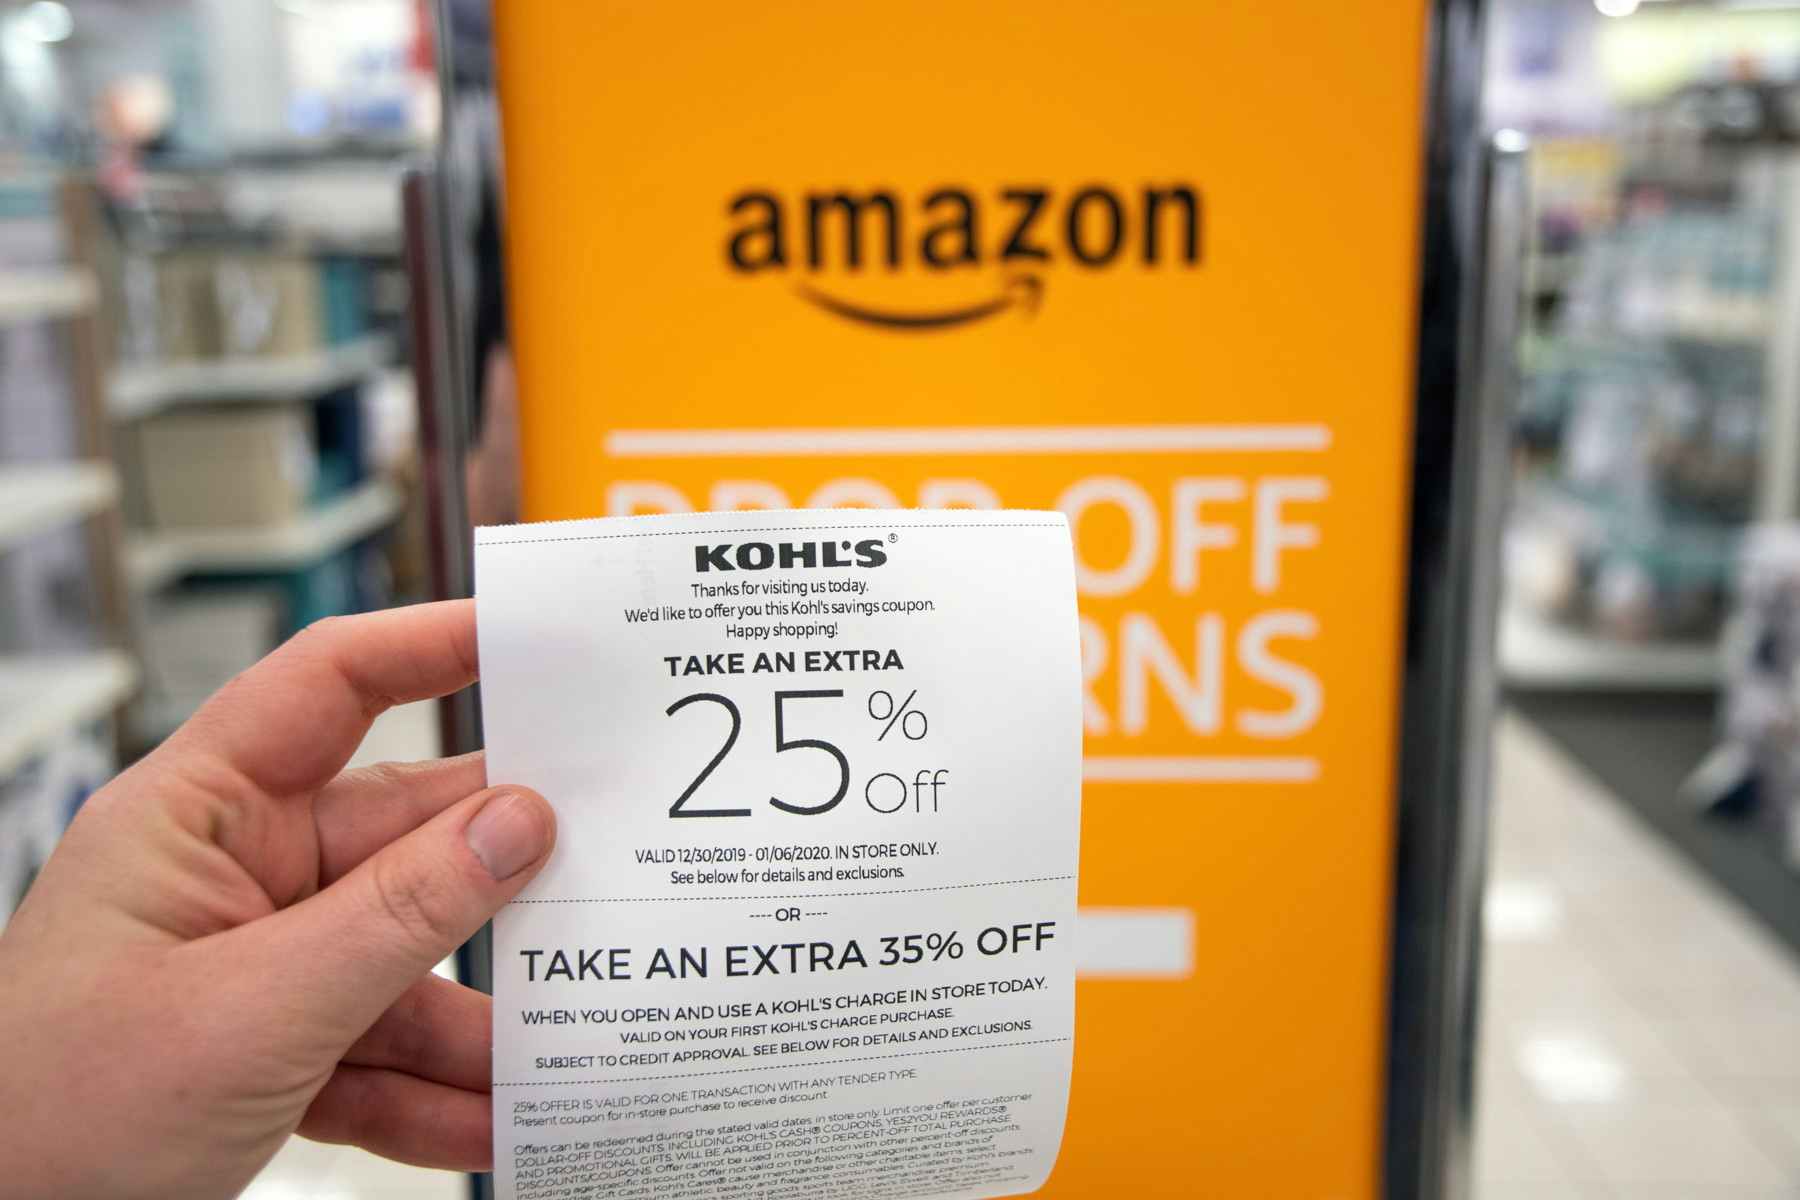 Take advantage of free Amazon returns at Kohl's.